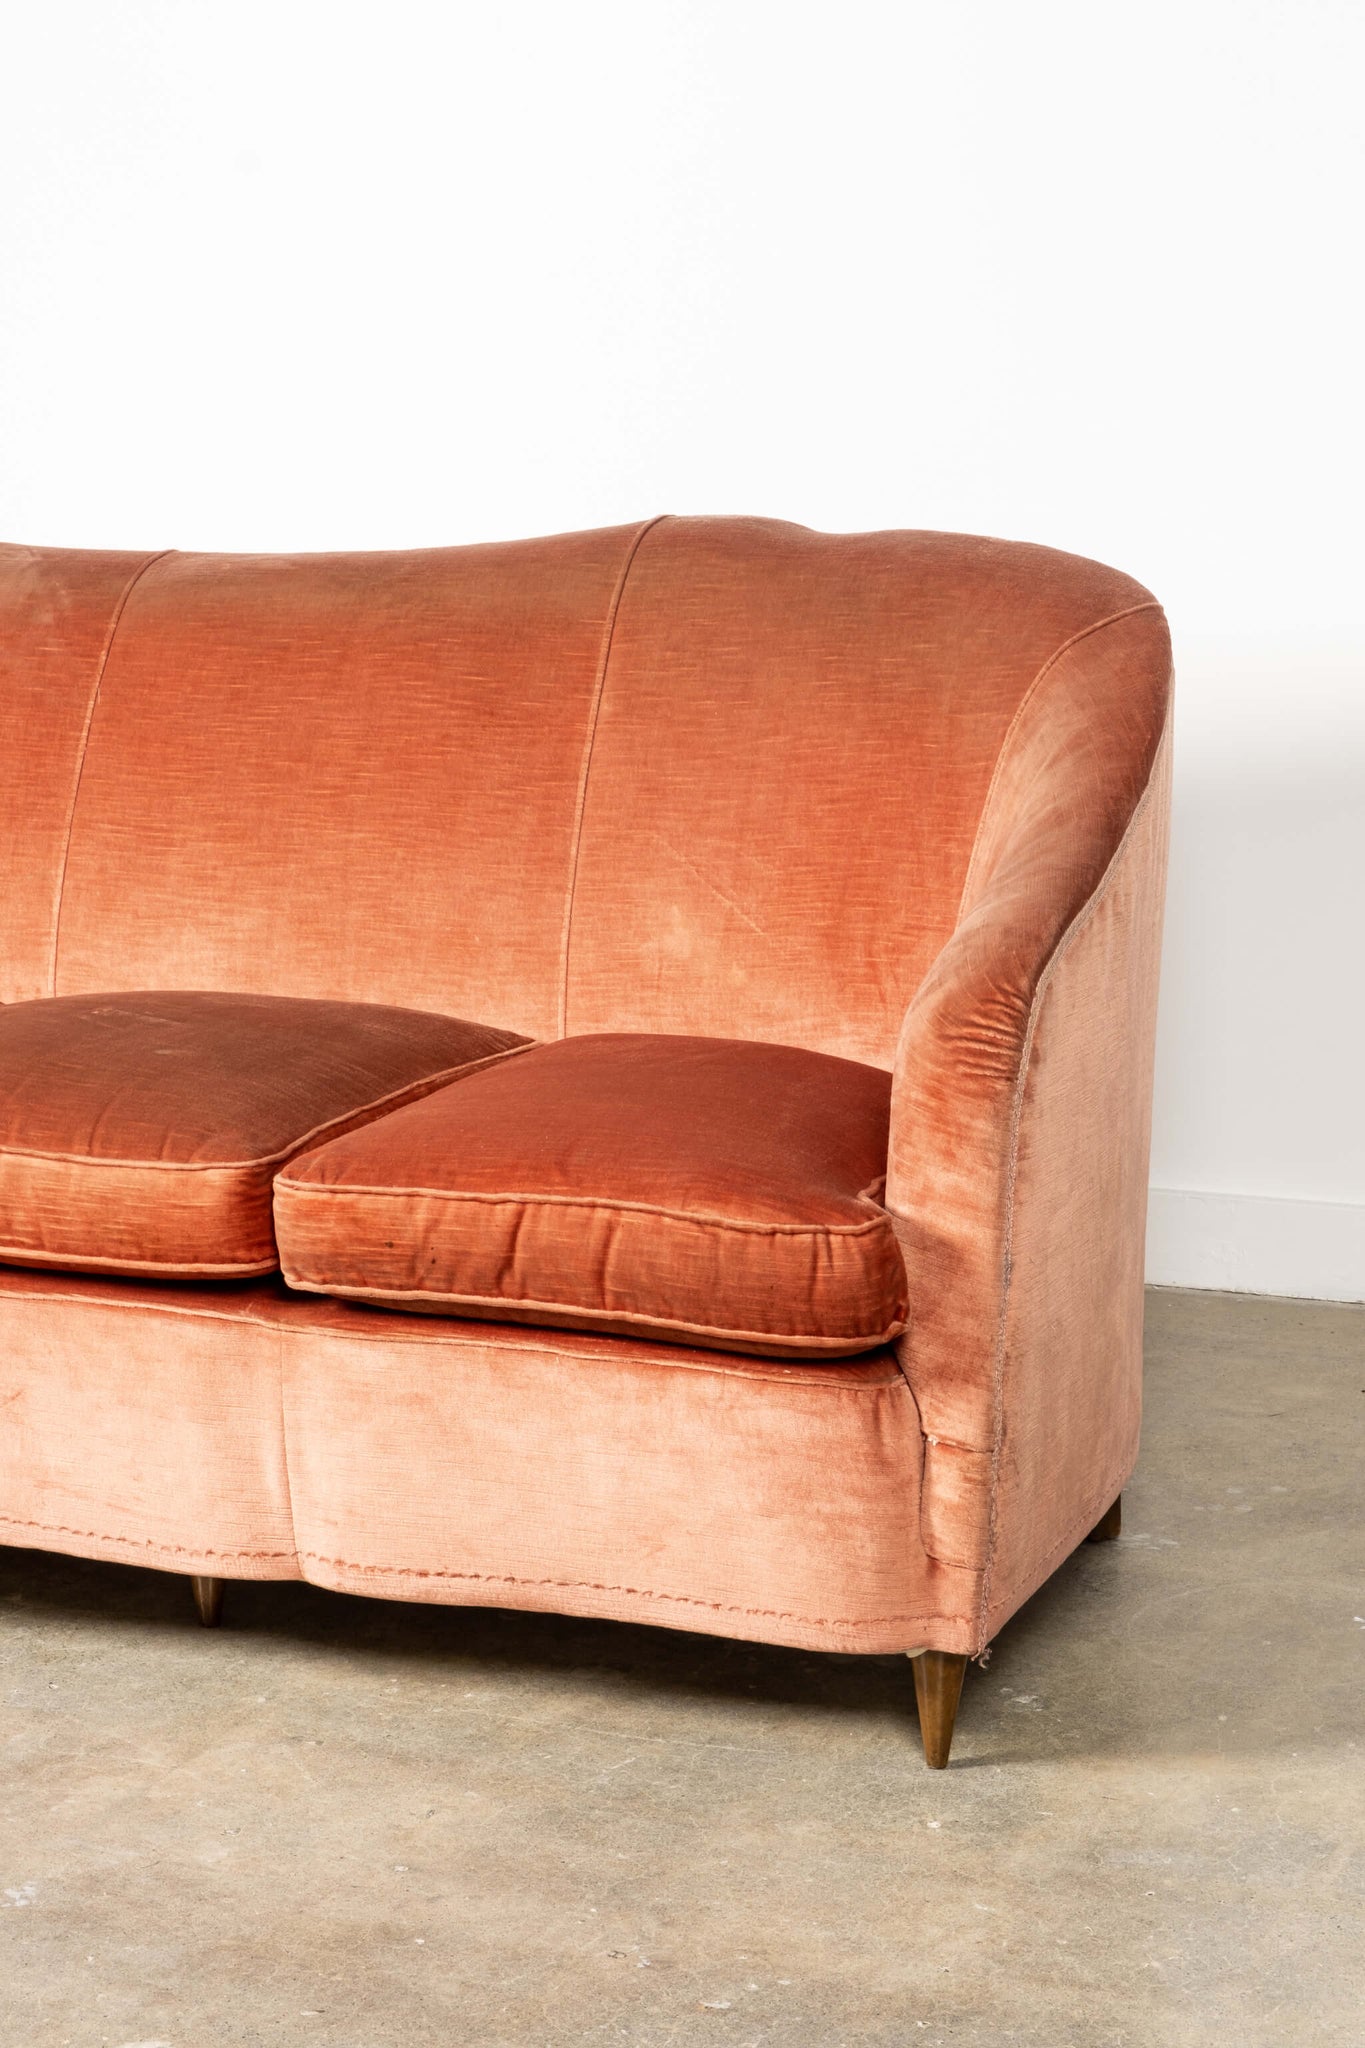 Extremely Rare Vintage Pink Orange Sofa with Curved Frame Detail Casa Giardino Gio Ponti, side detail